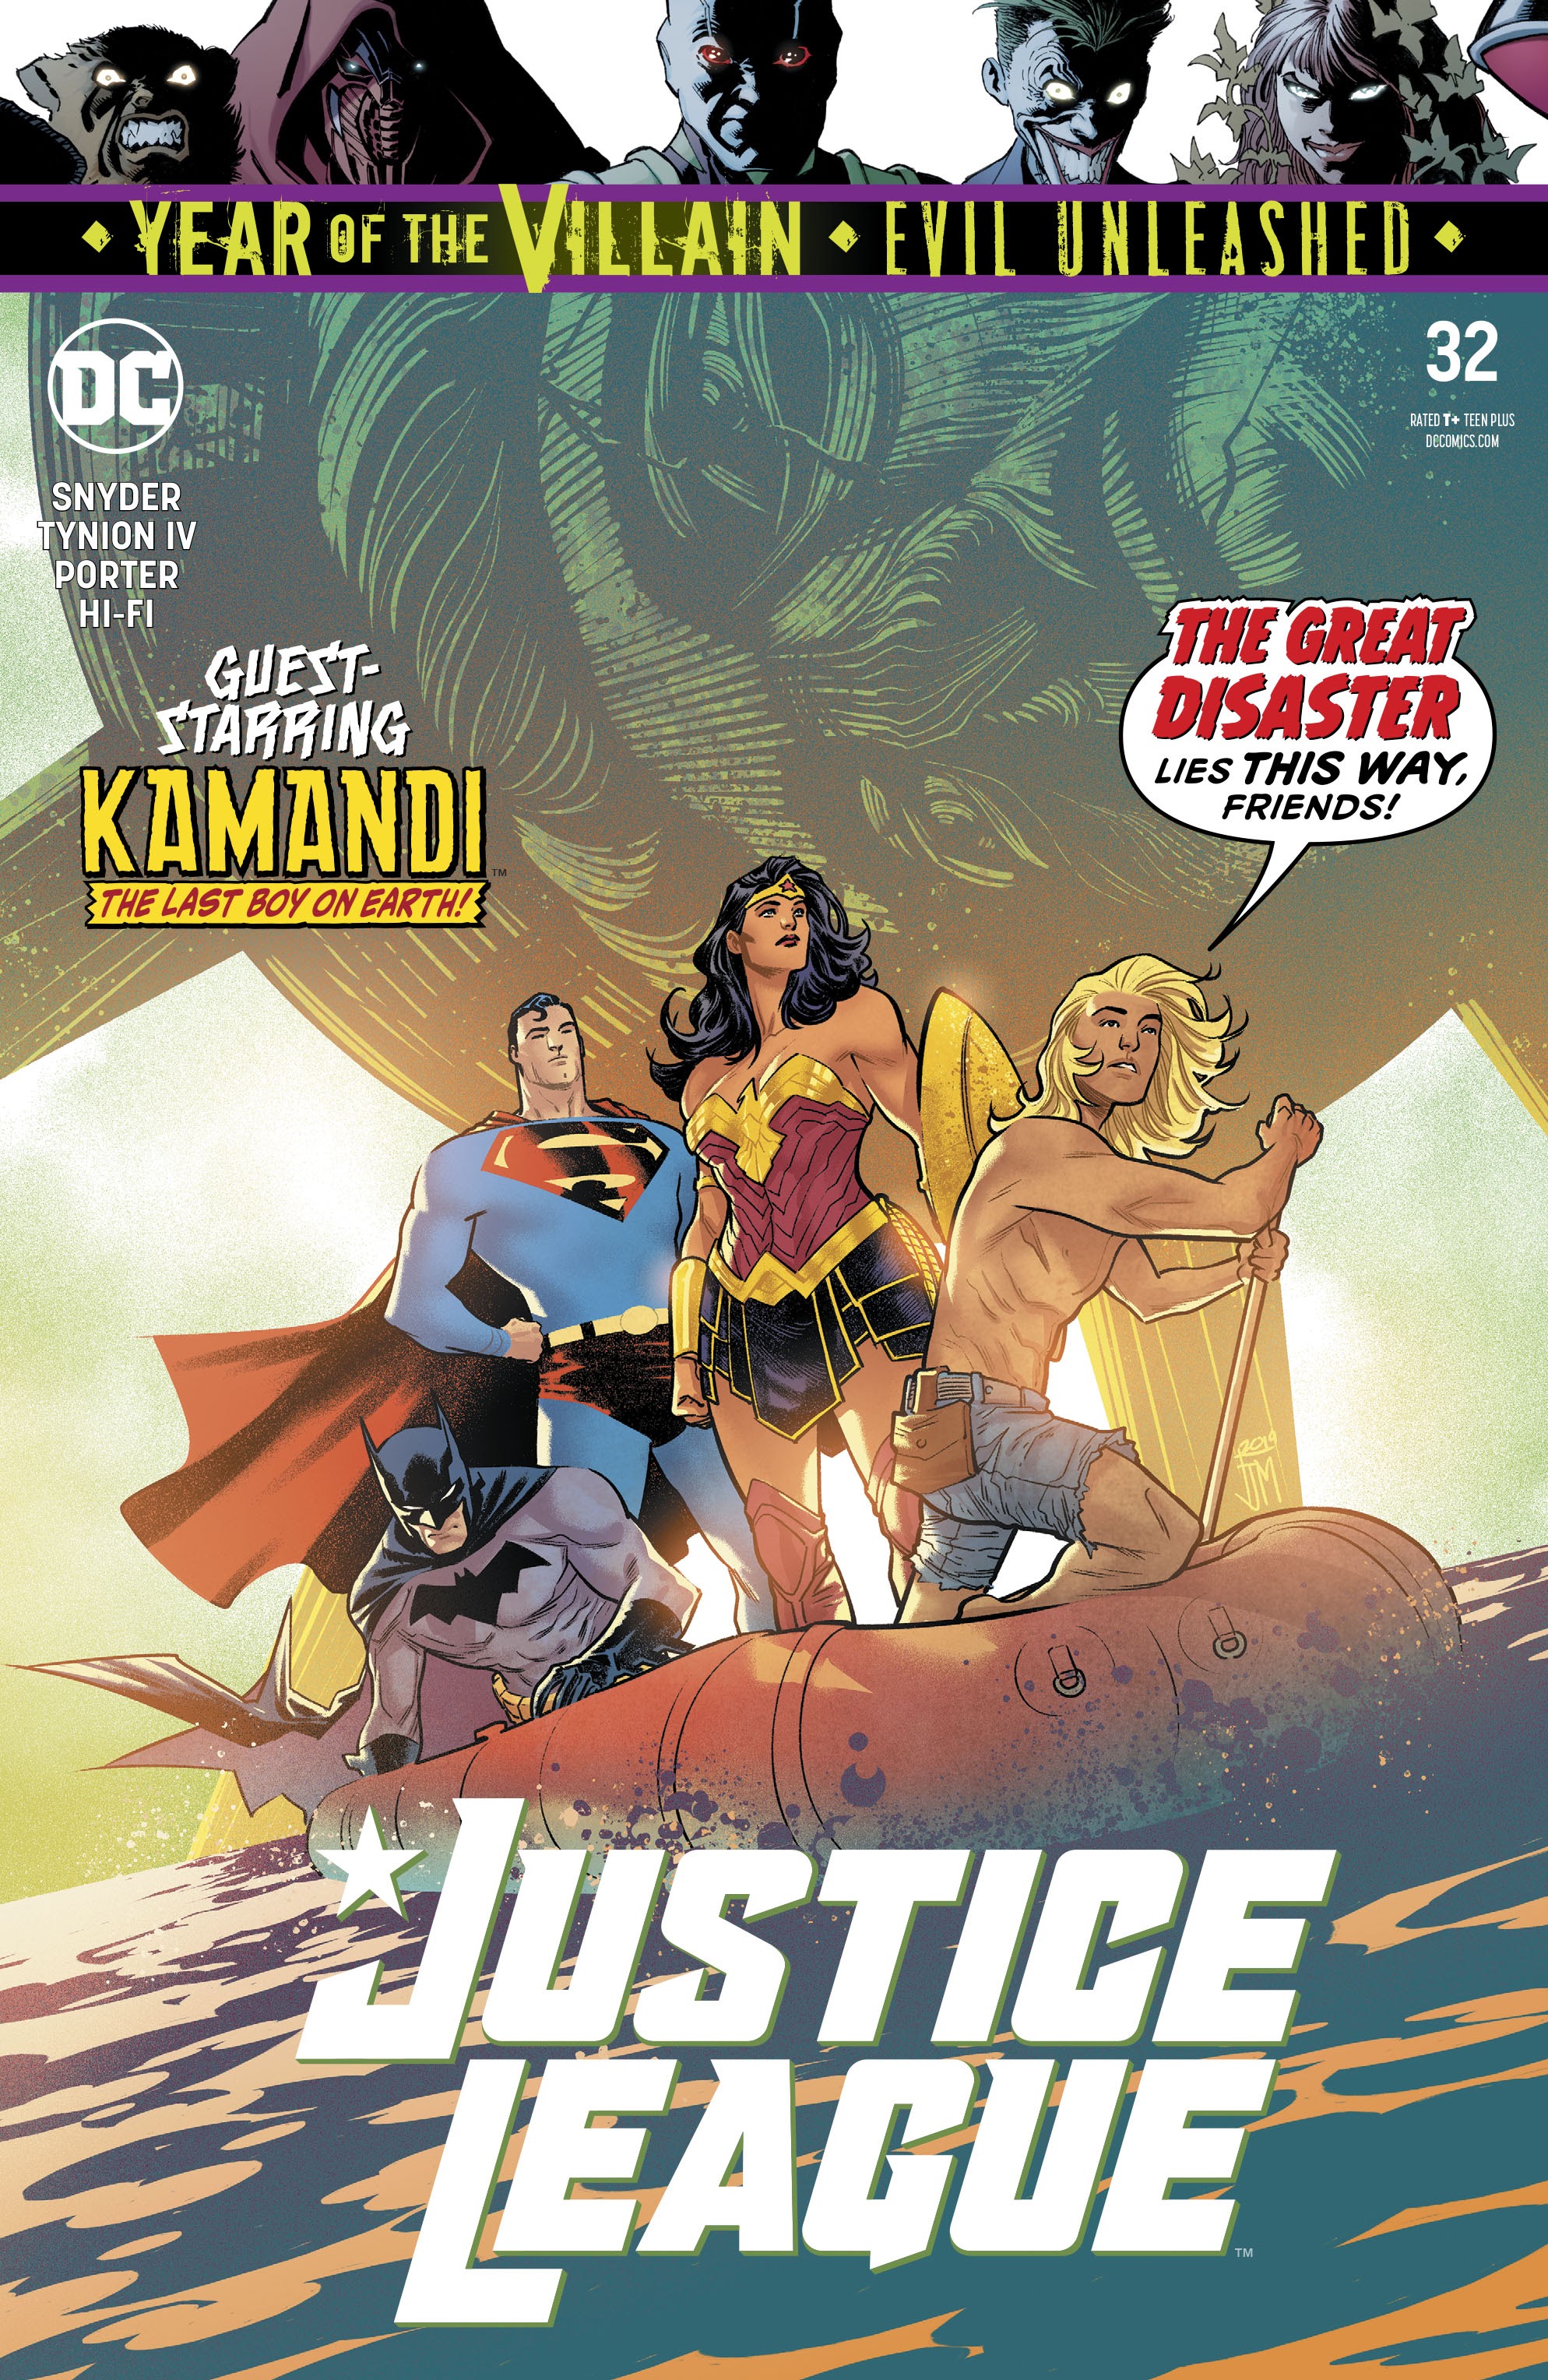 JUSTICE LEAGUE #28 DC COMICS VARIANT SEPTEMBER 2019 